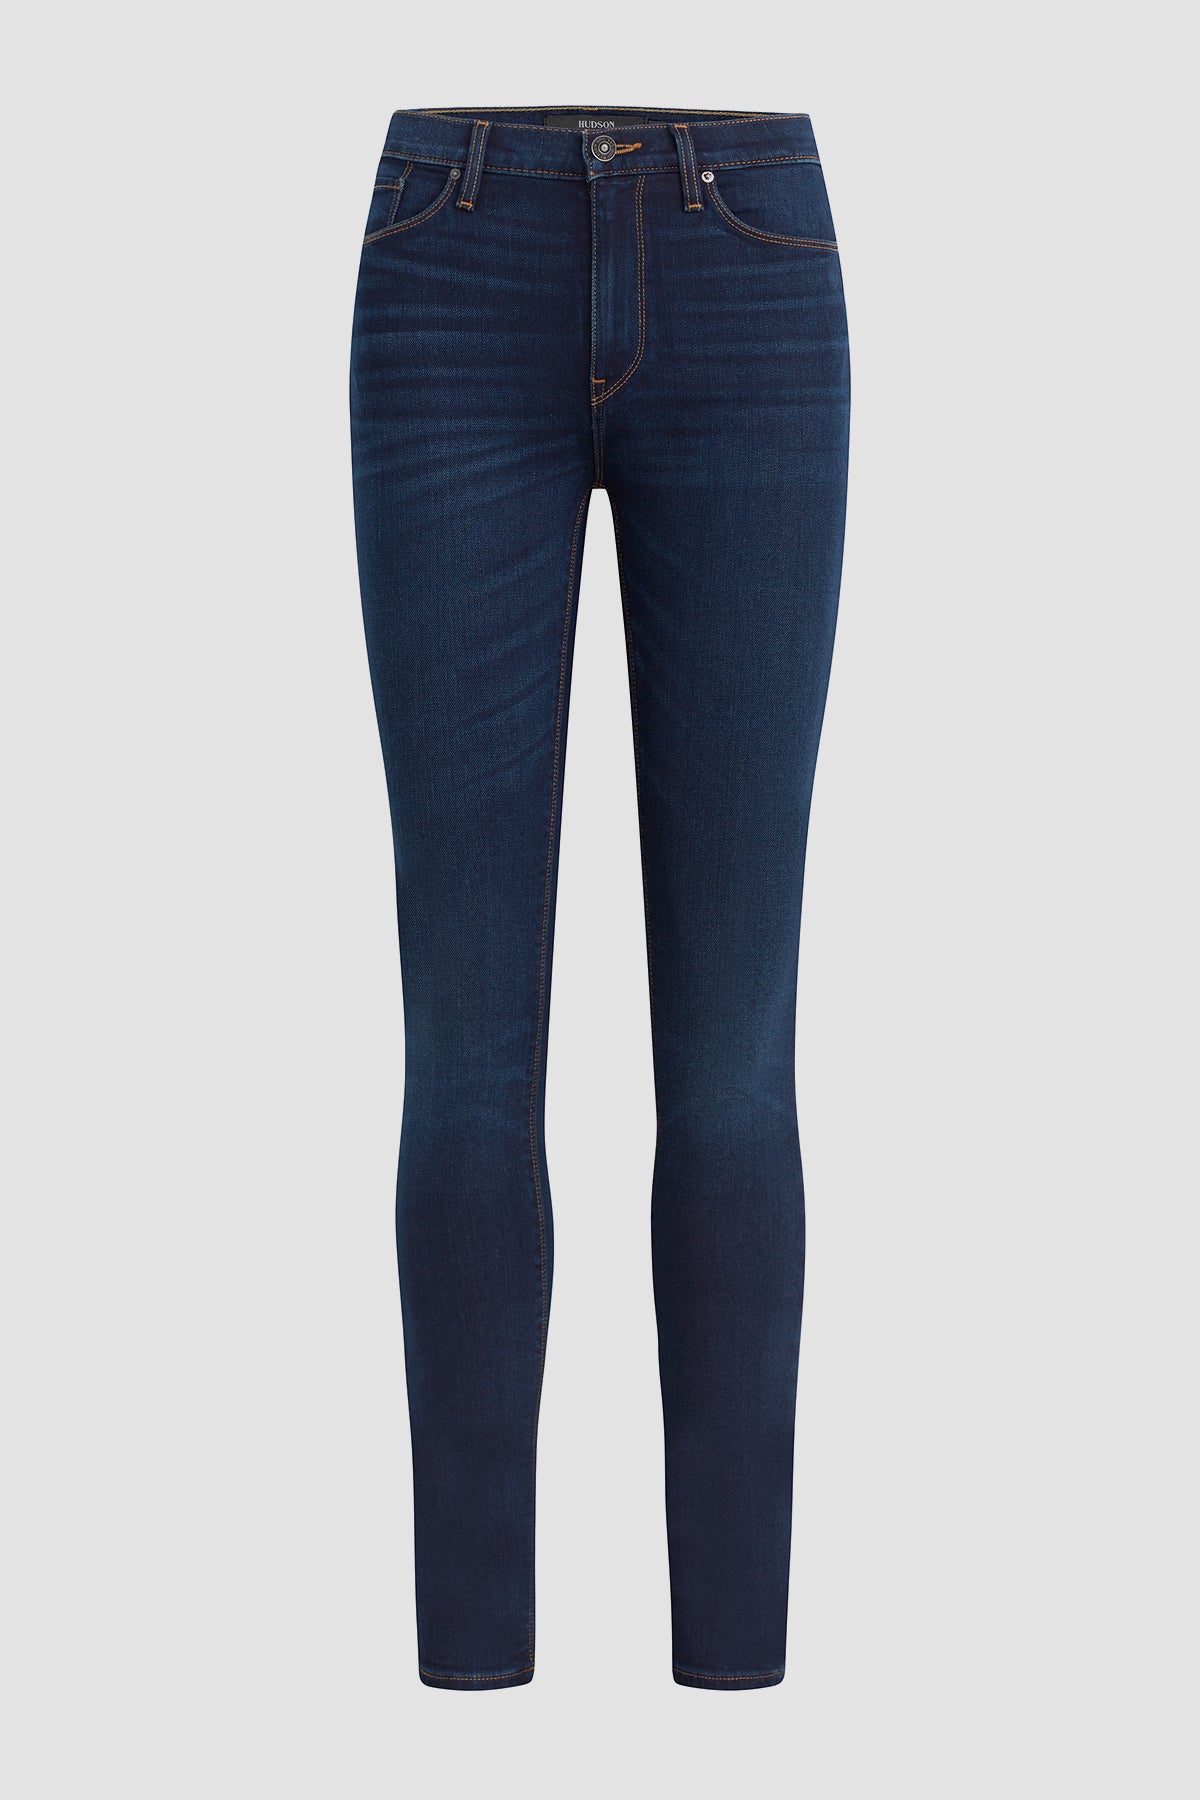 VMCARRIE Super high rise Jeans, Medium Blue